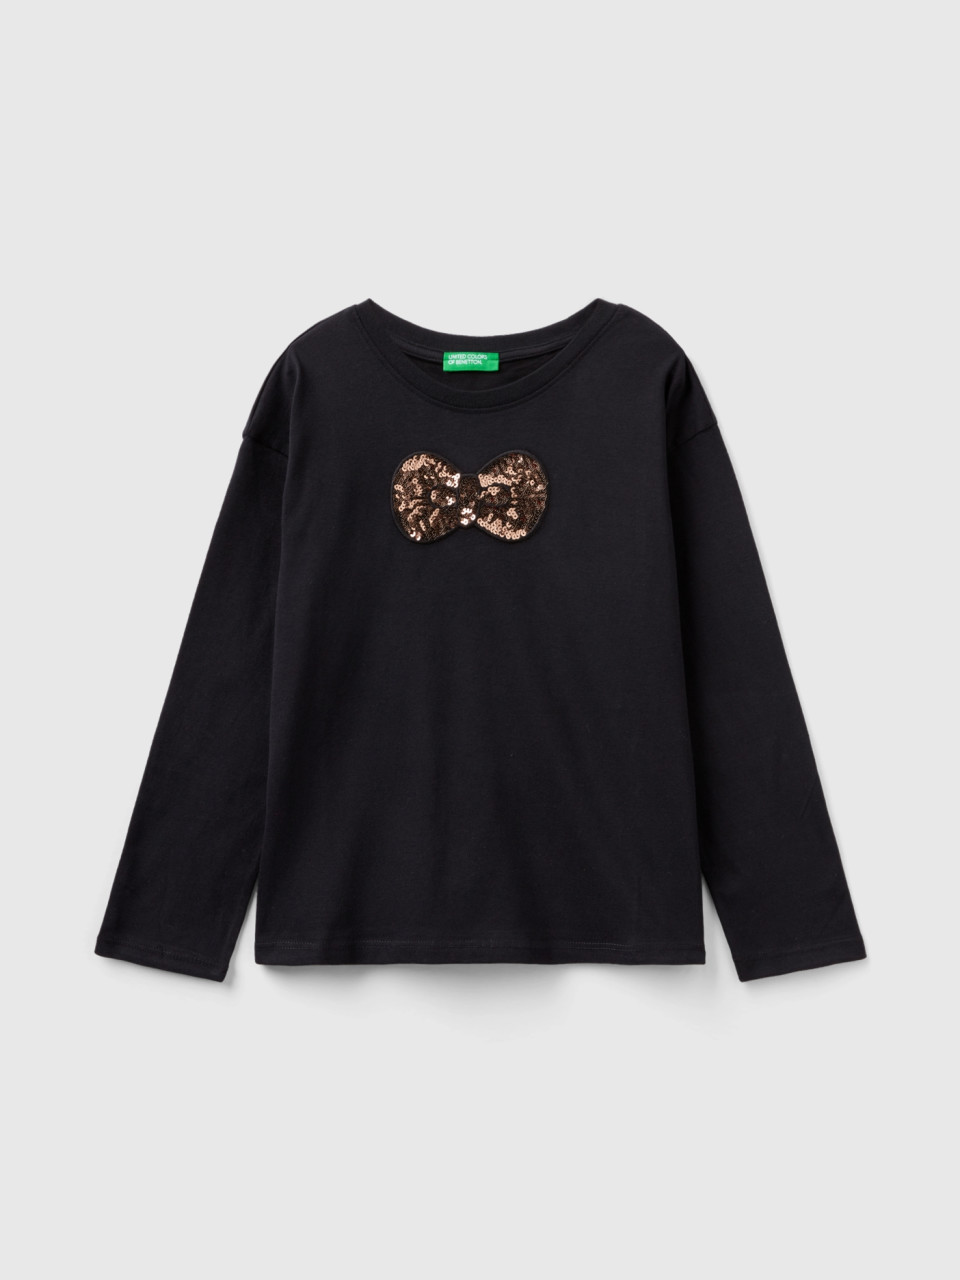 Benetton, Warm Cotton T-shirt With Sequins, Black, Kids